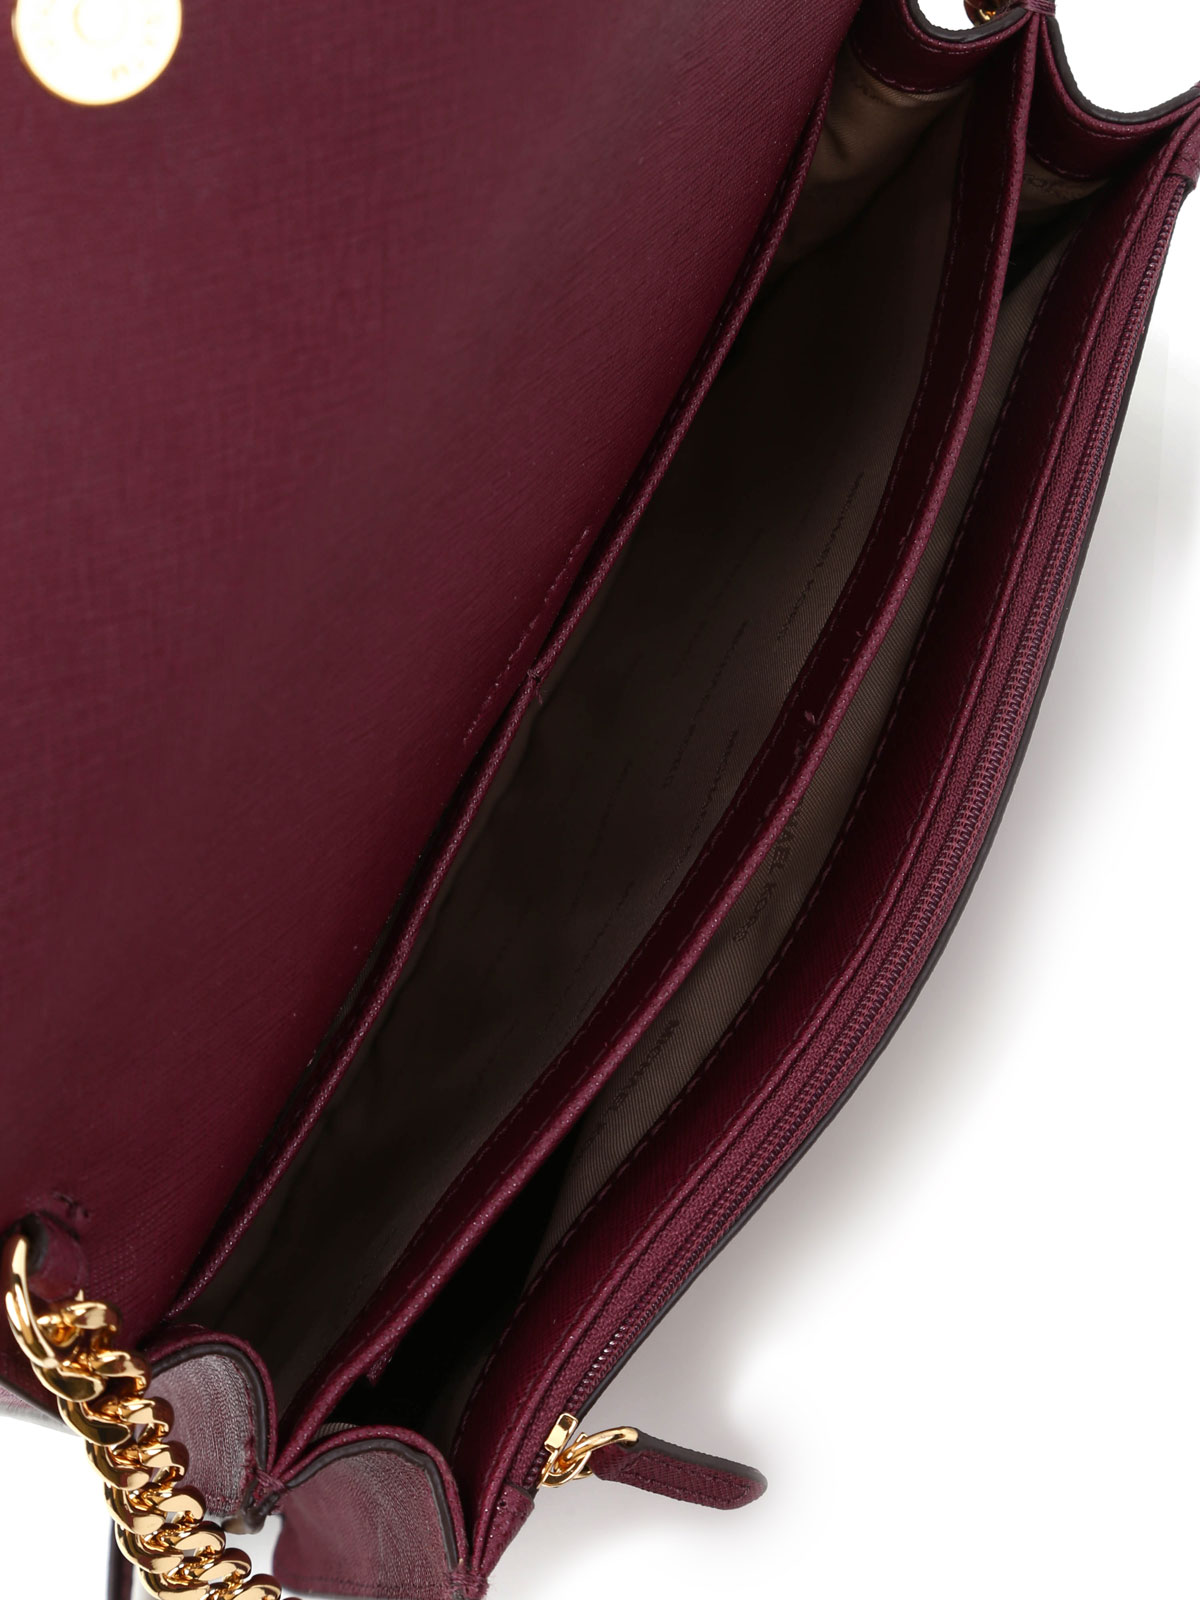 Michael Kors Daniela Large Saffiano Leather Crossbody Bag for Sale